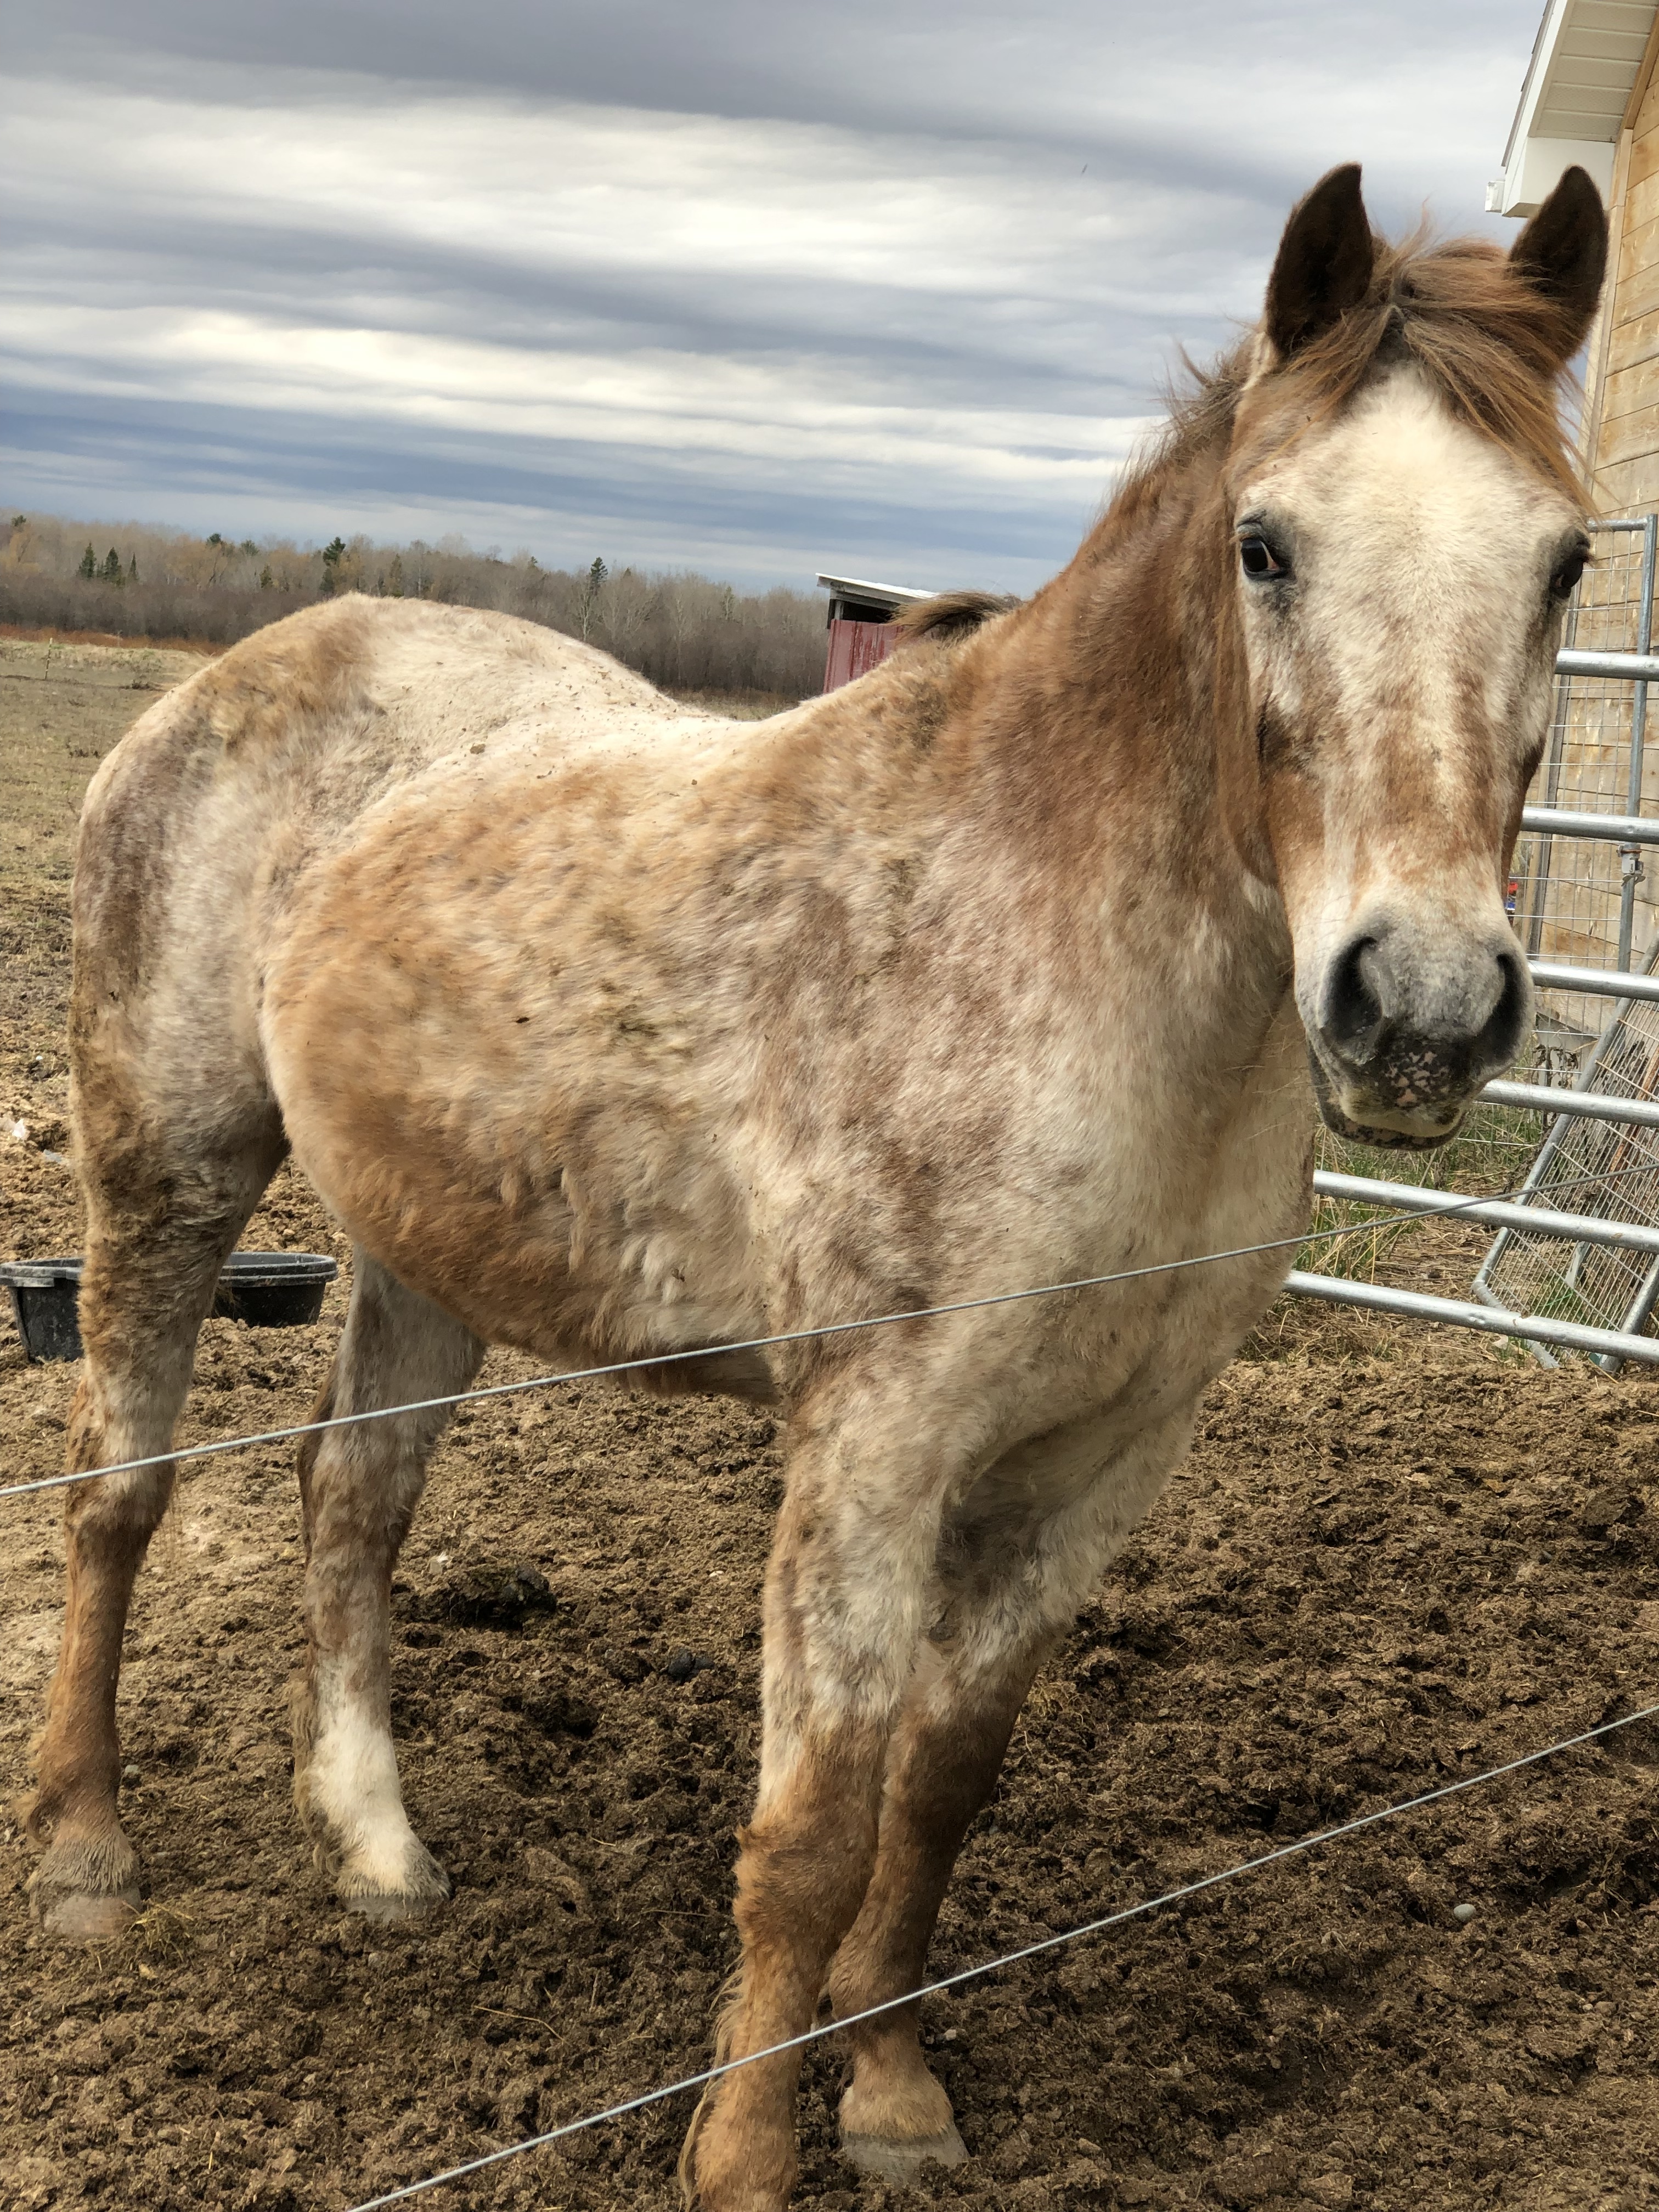 Horse for adoption - Appaloosa & Quarterhorse Mix in Sault Sainte MI | Petfinder